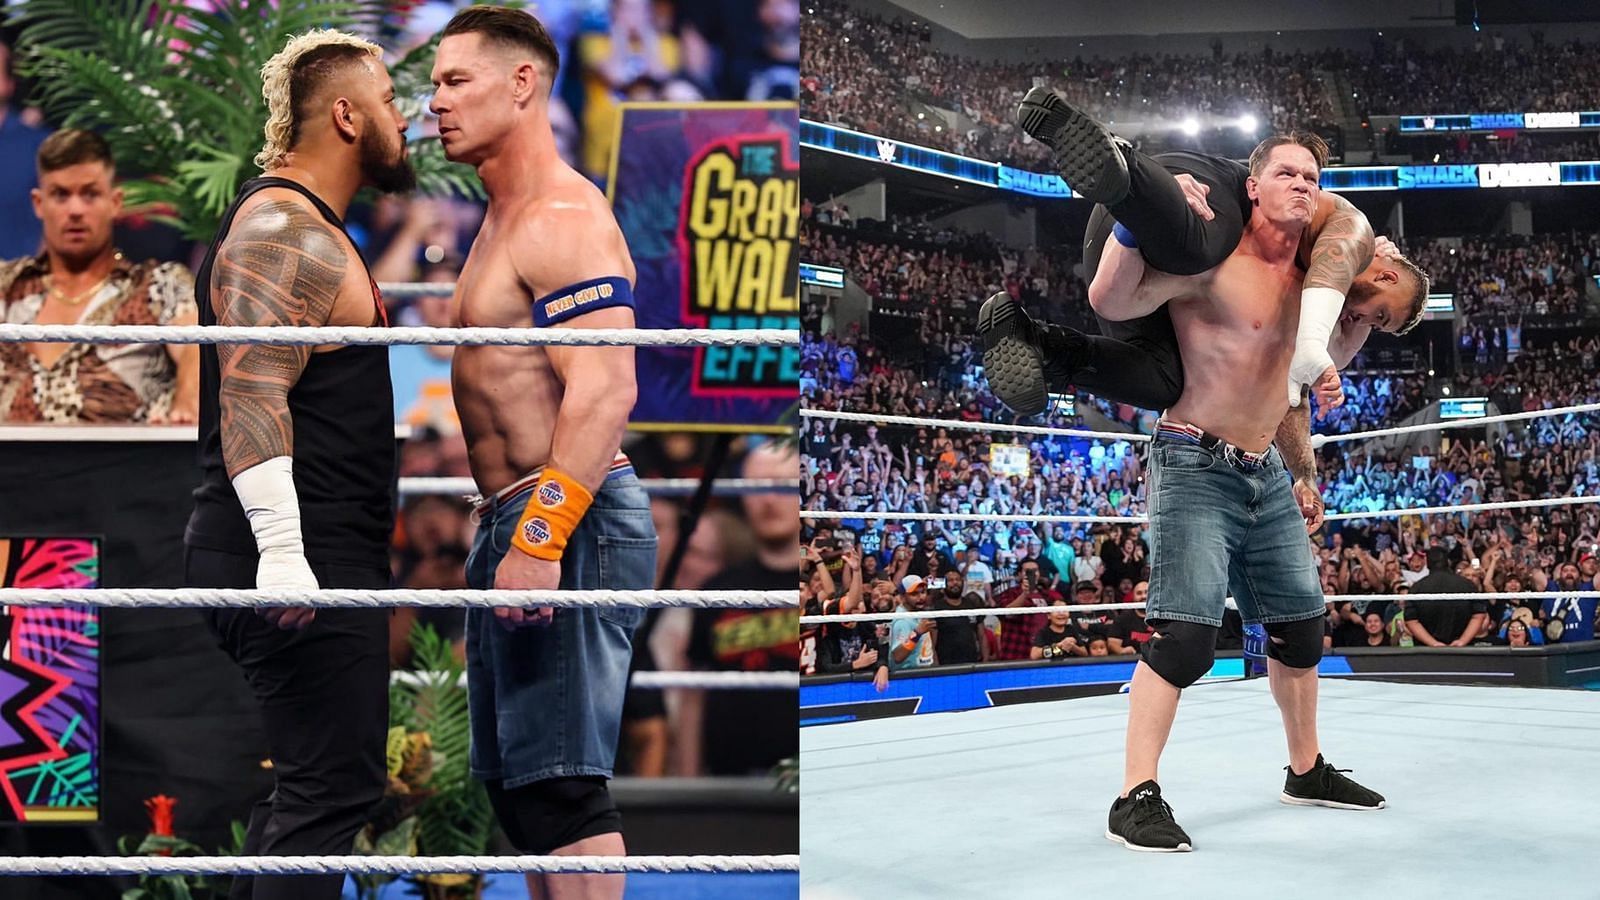 John Cena and Solo Sikoa had an altercation on SmackDown!